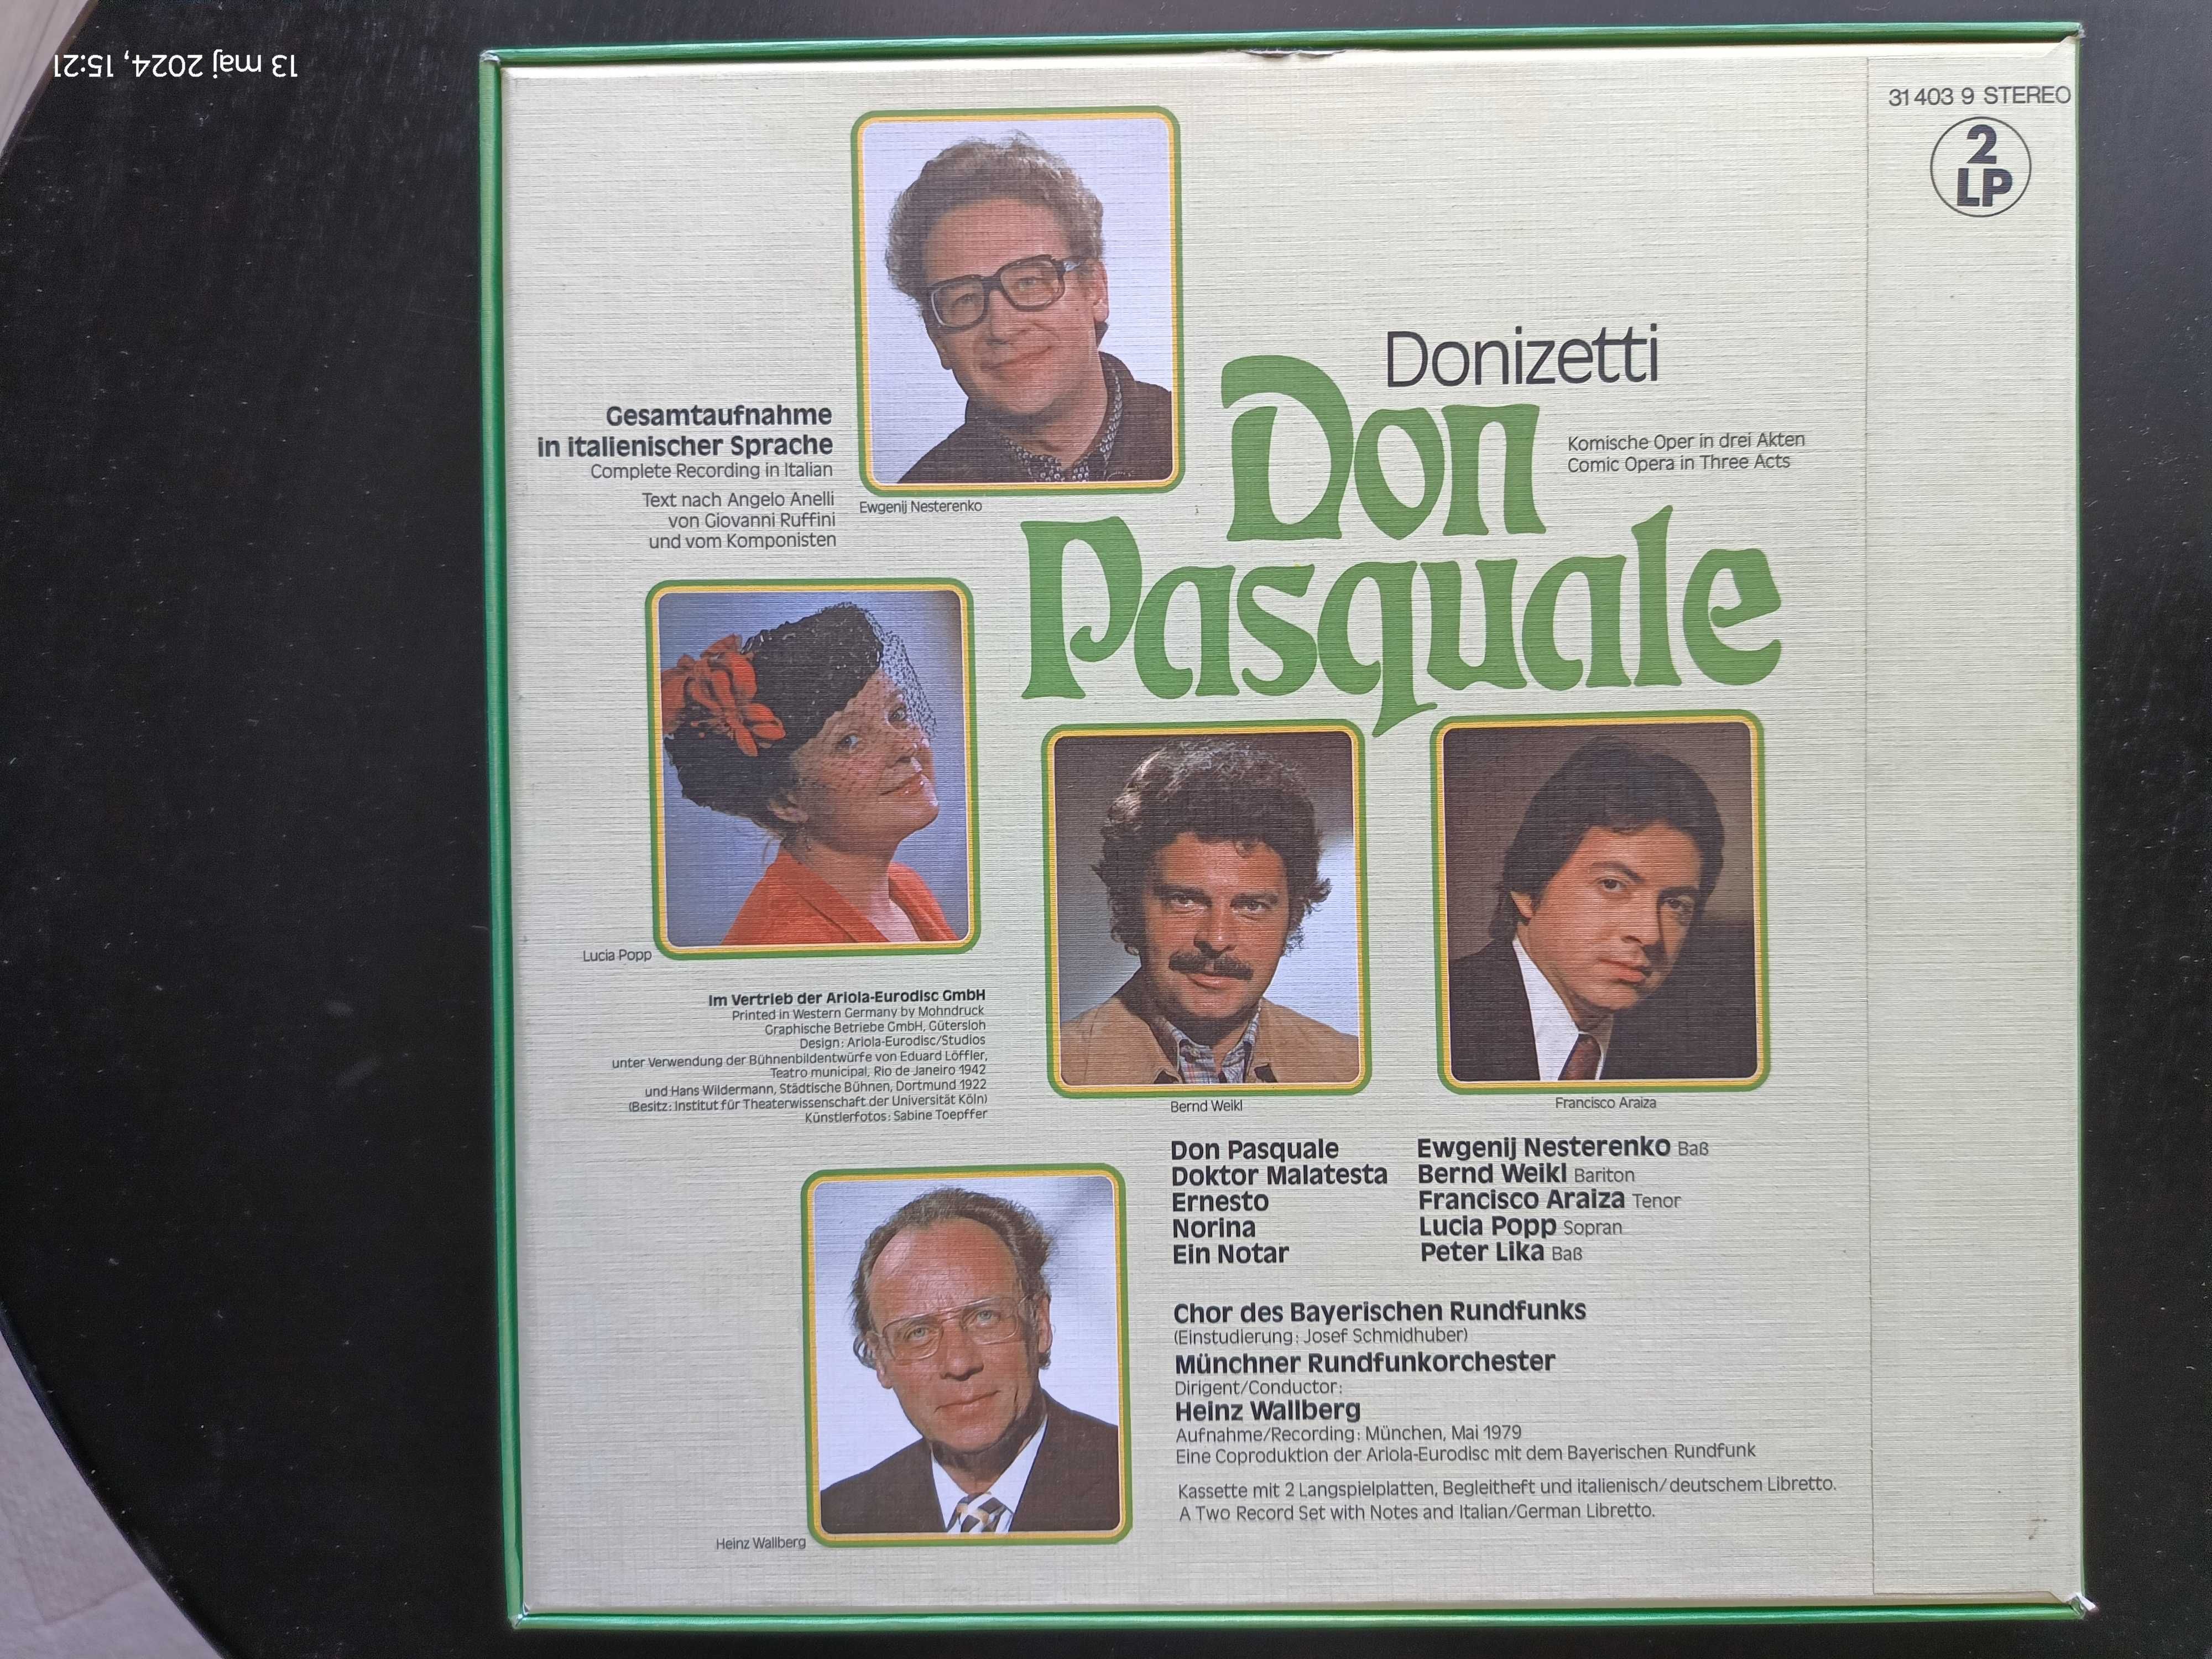 Gaetano Donizetti - "Don Pasquale"